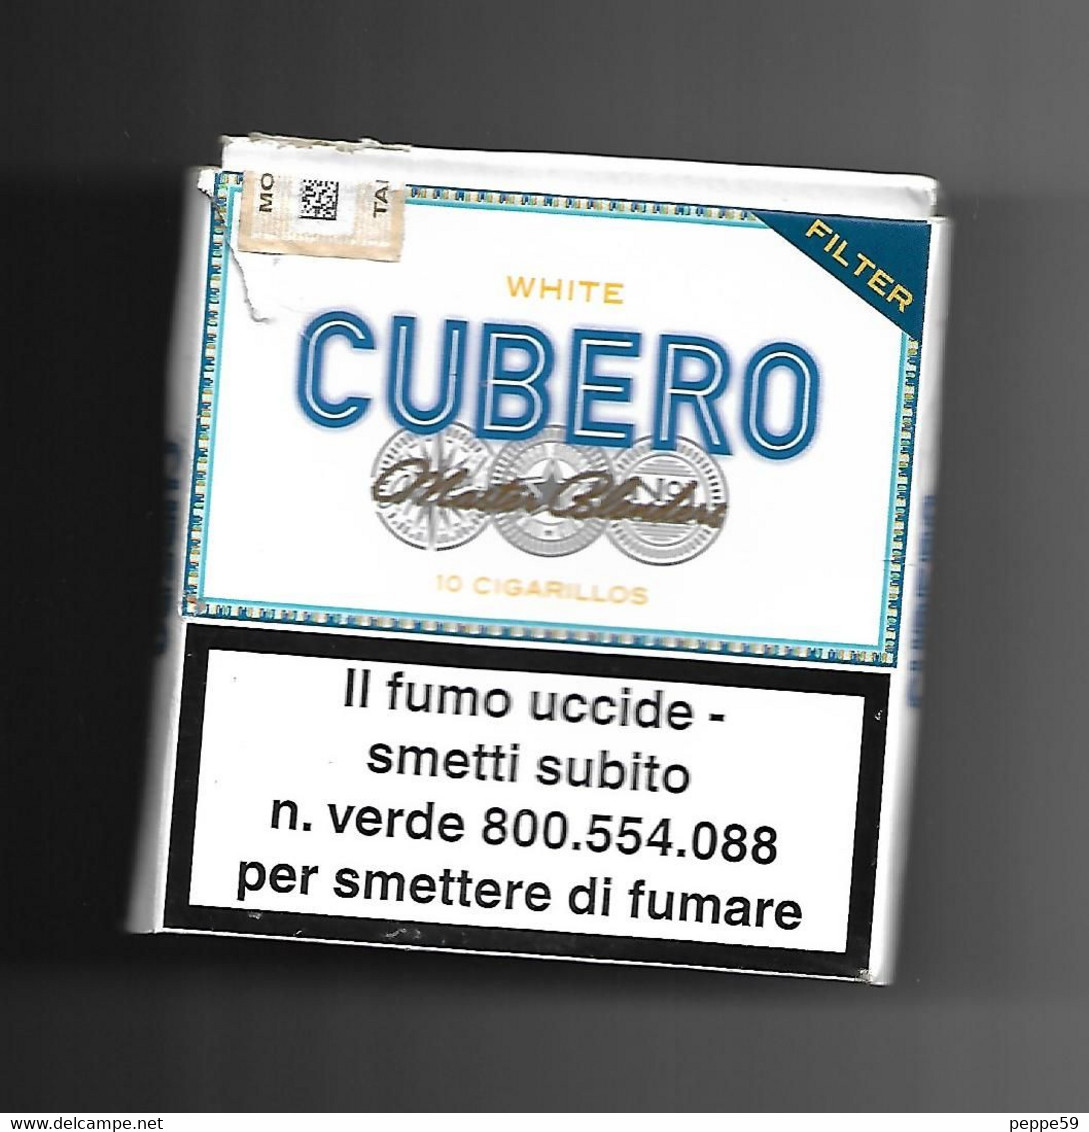 Tabacco Pacchetto Di Sigari Italia - 10 Cubero N.01 - (vuoto)  Tobacco-Tabac-Tabak-Tabaco - Sigarenkisten (leeg)